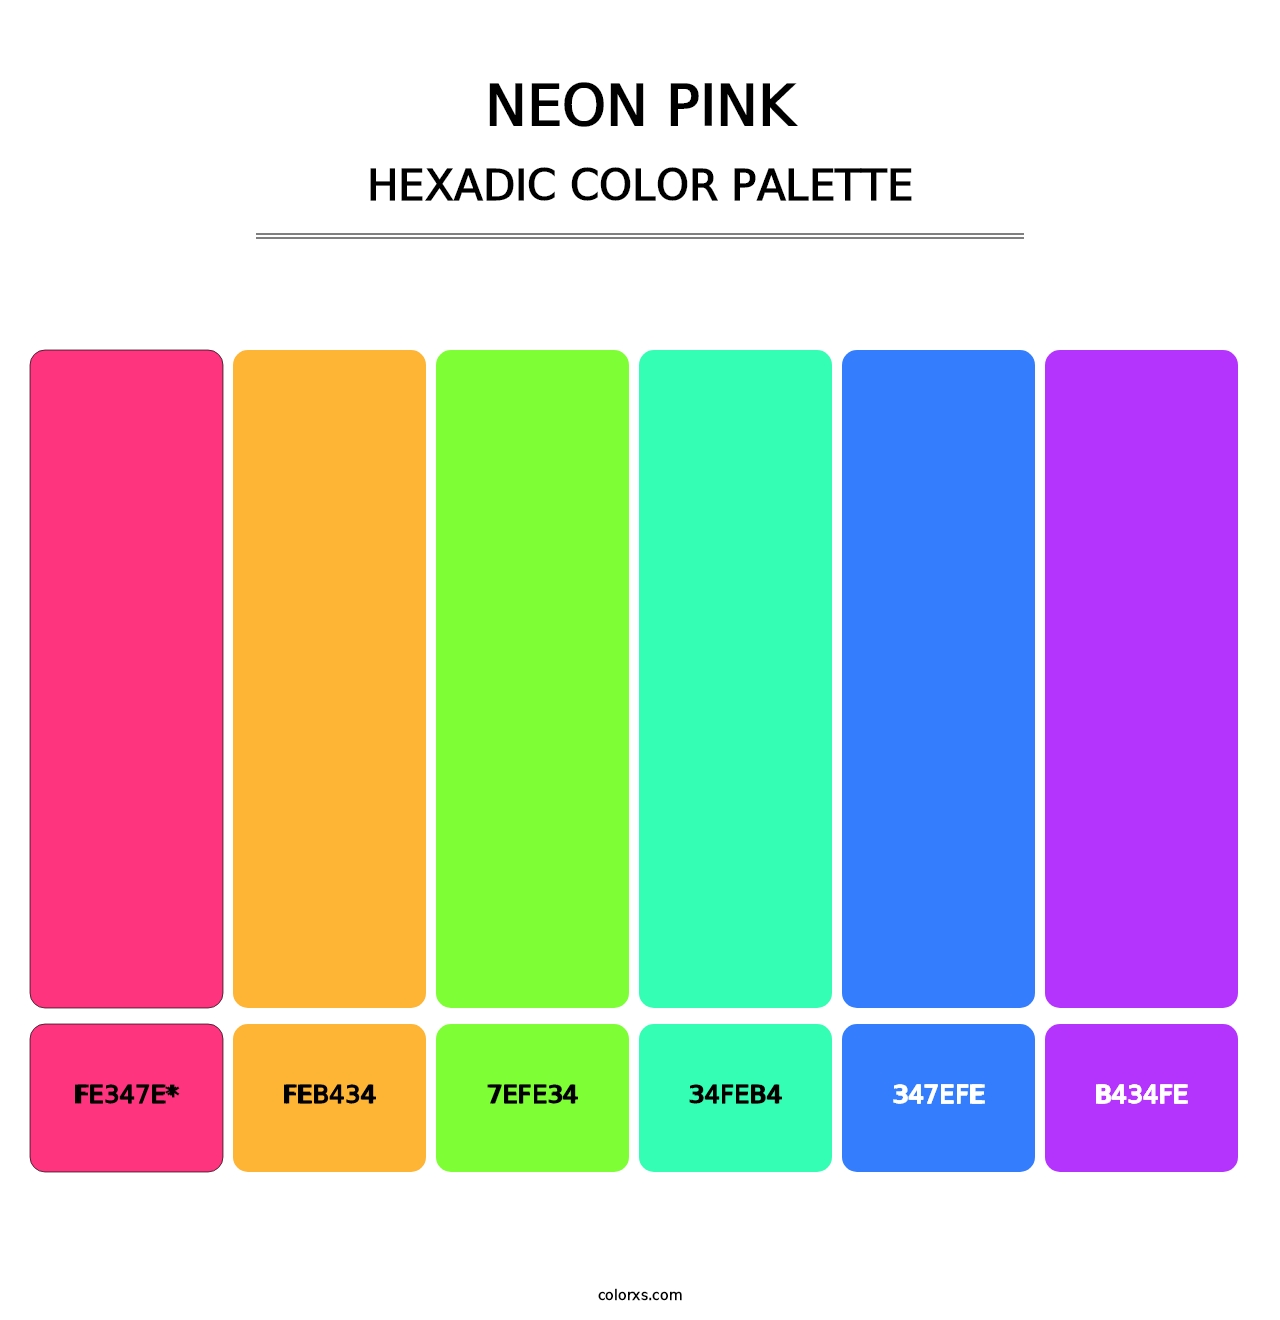 Neon Pink - Hexadic Color Palette